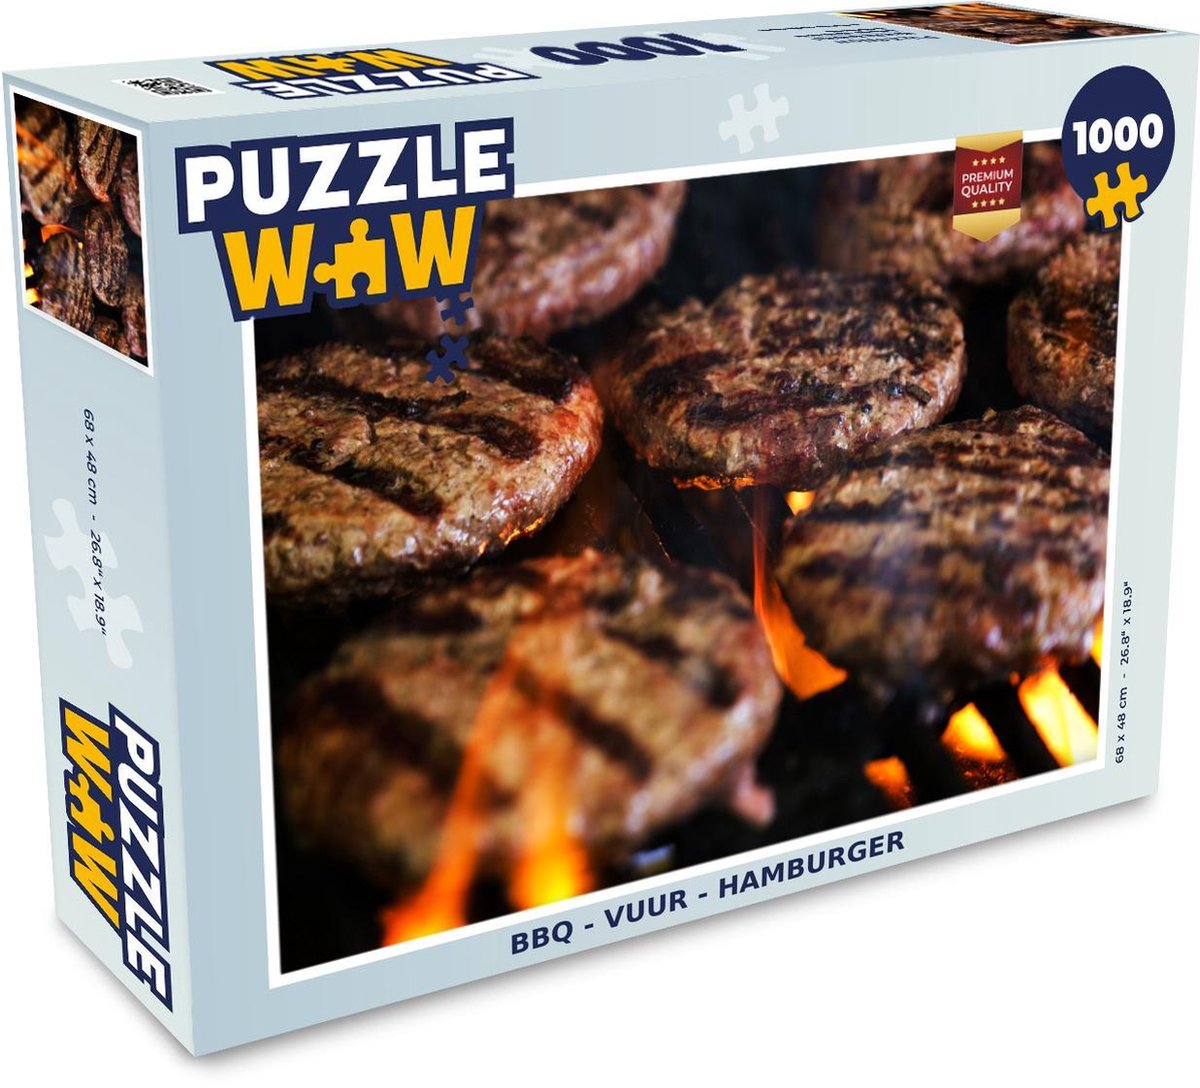 Afbeelding van product PuzzleWow  Puzzel - Puzzel 1000 stukjes volwassenen - BBQ - Vuur - Hamburger - Legpuzzel